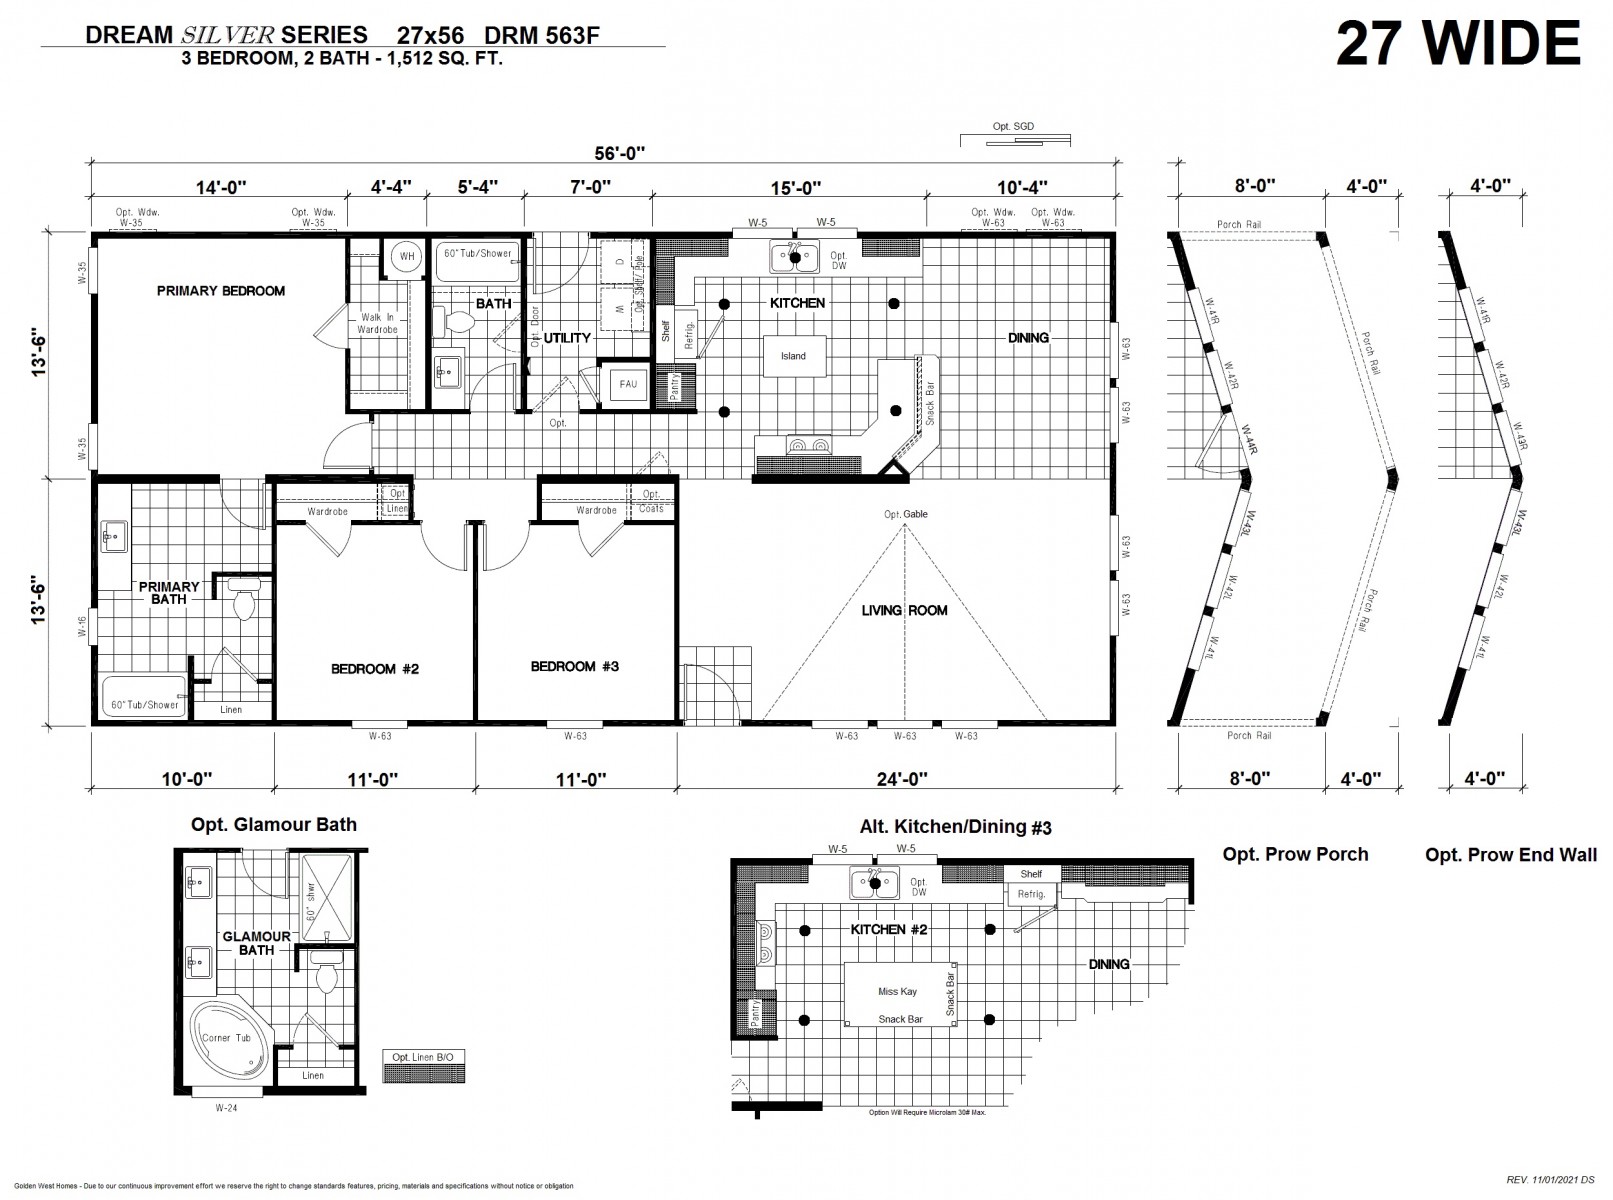 Homes Direct Modular Homes - Model DRM563F - Floorplan